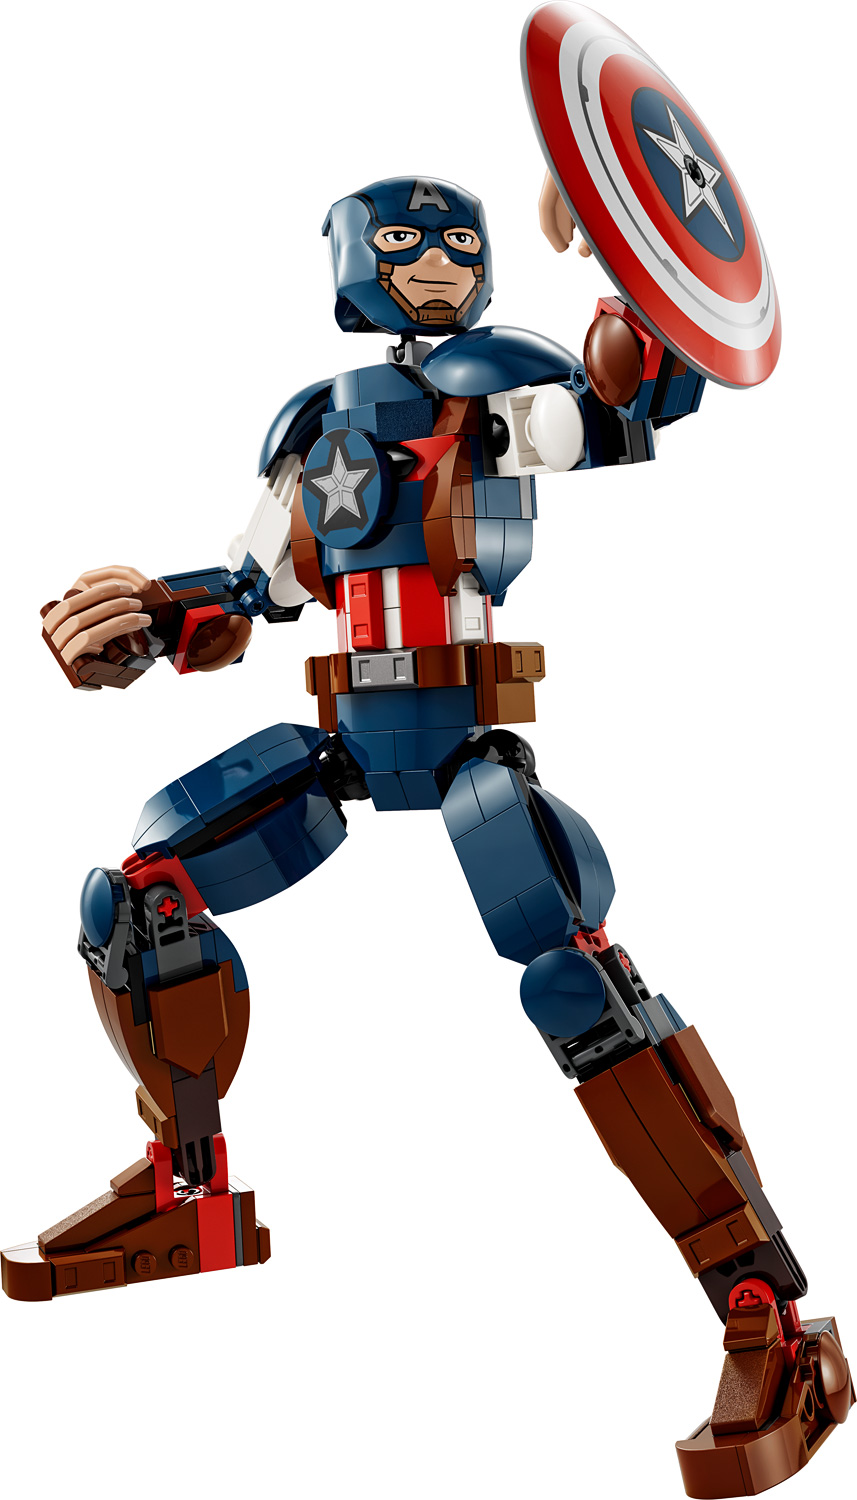 LEGO MARVEL 76258 Captain America Construction Figure